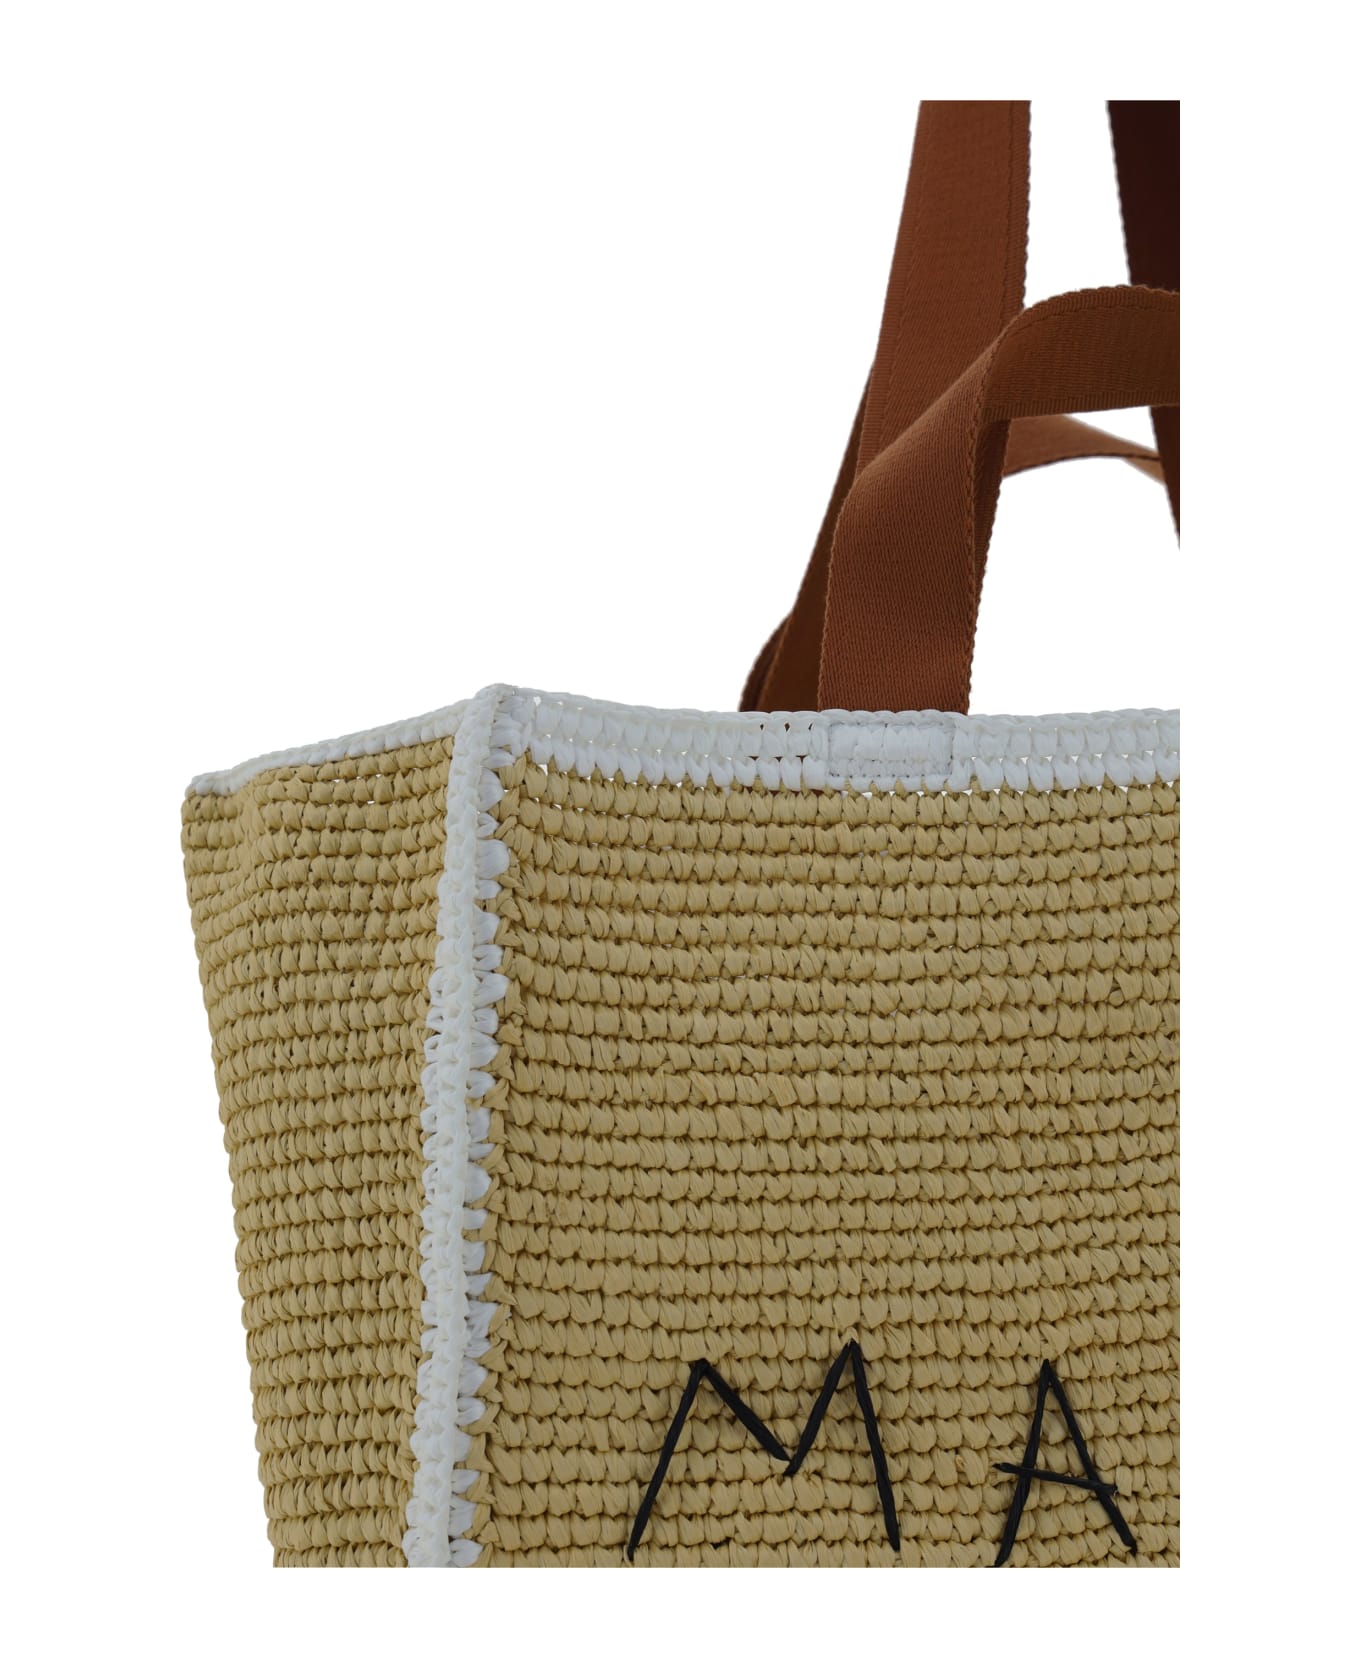 Marni Tote Sillo Medium Handbag - Natural/white/rust